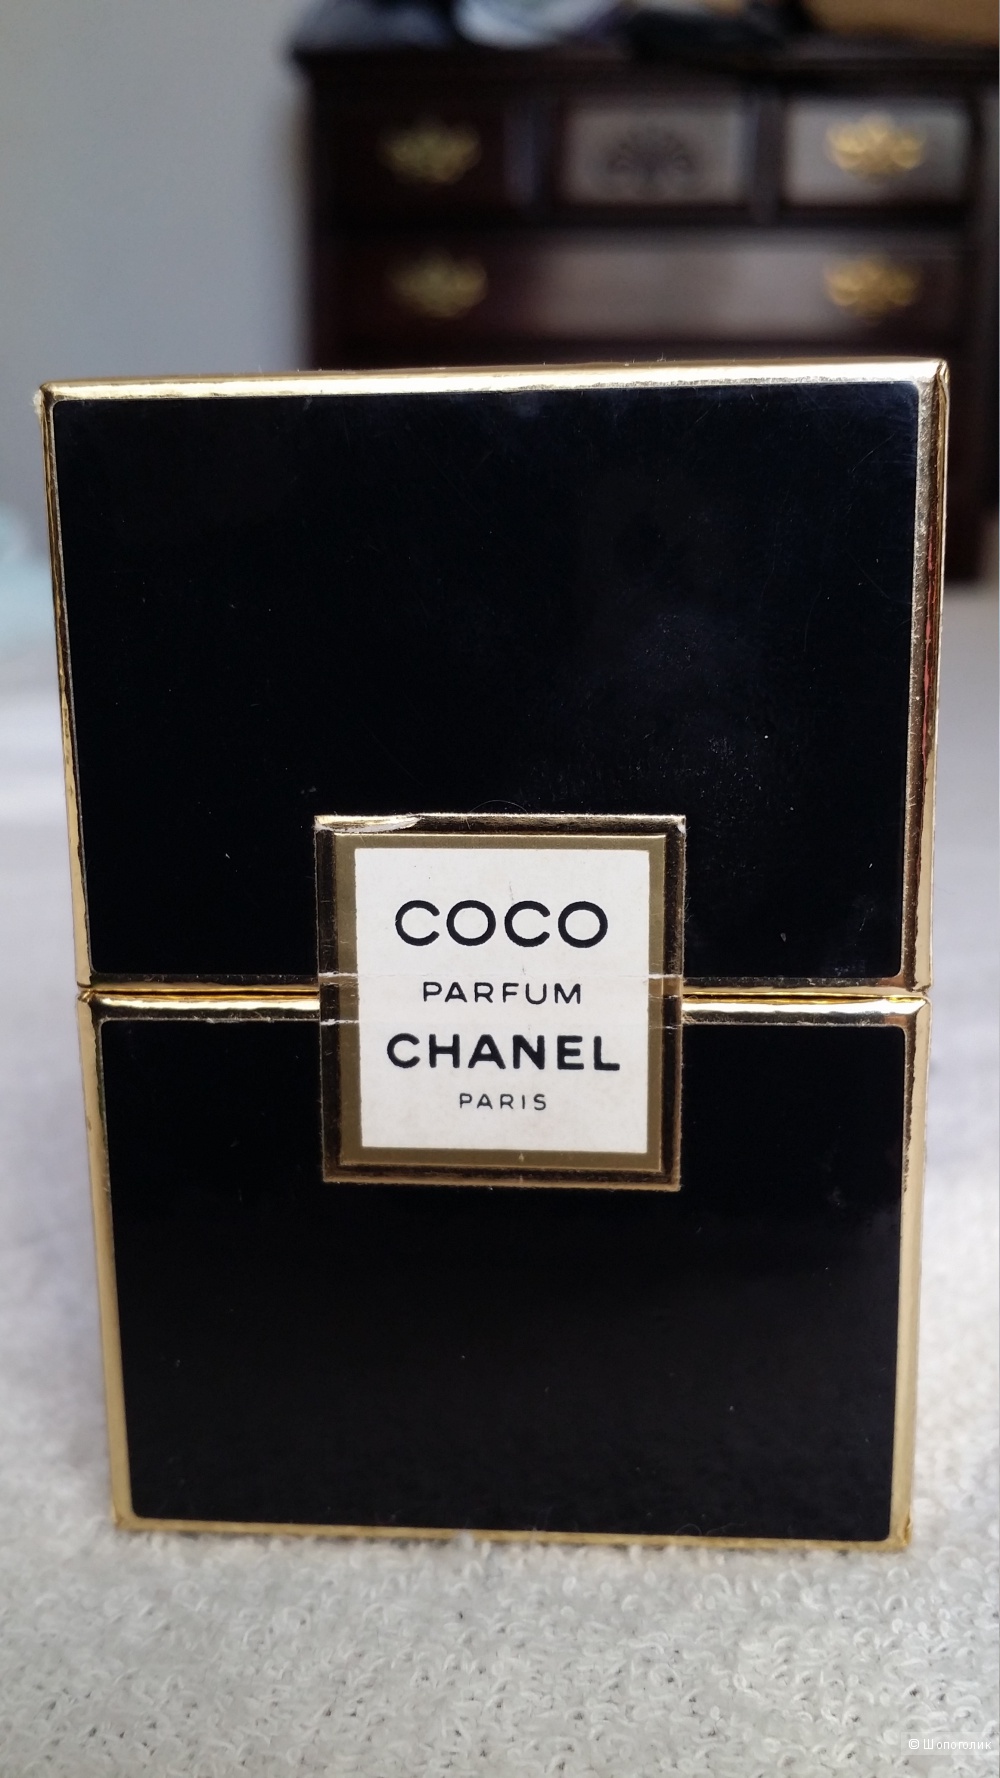 Coco parfum от Chanel, духи 7 мл